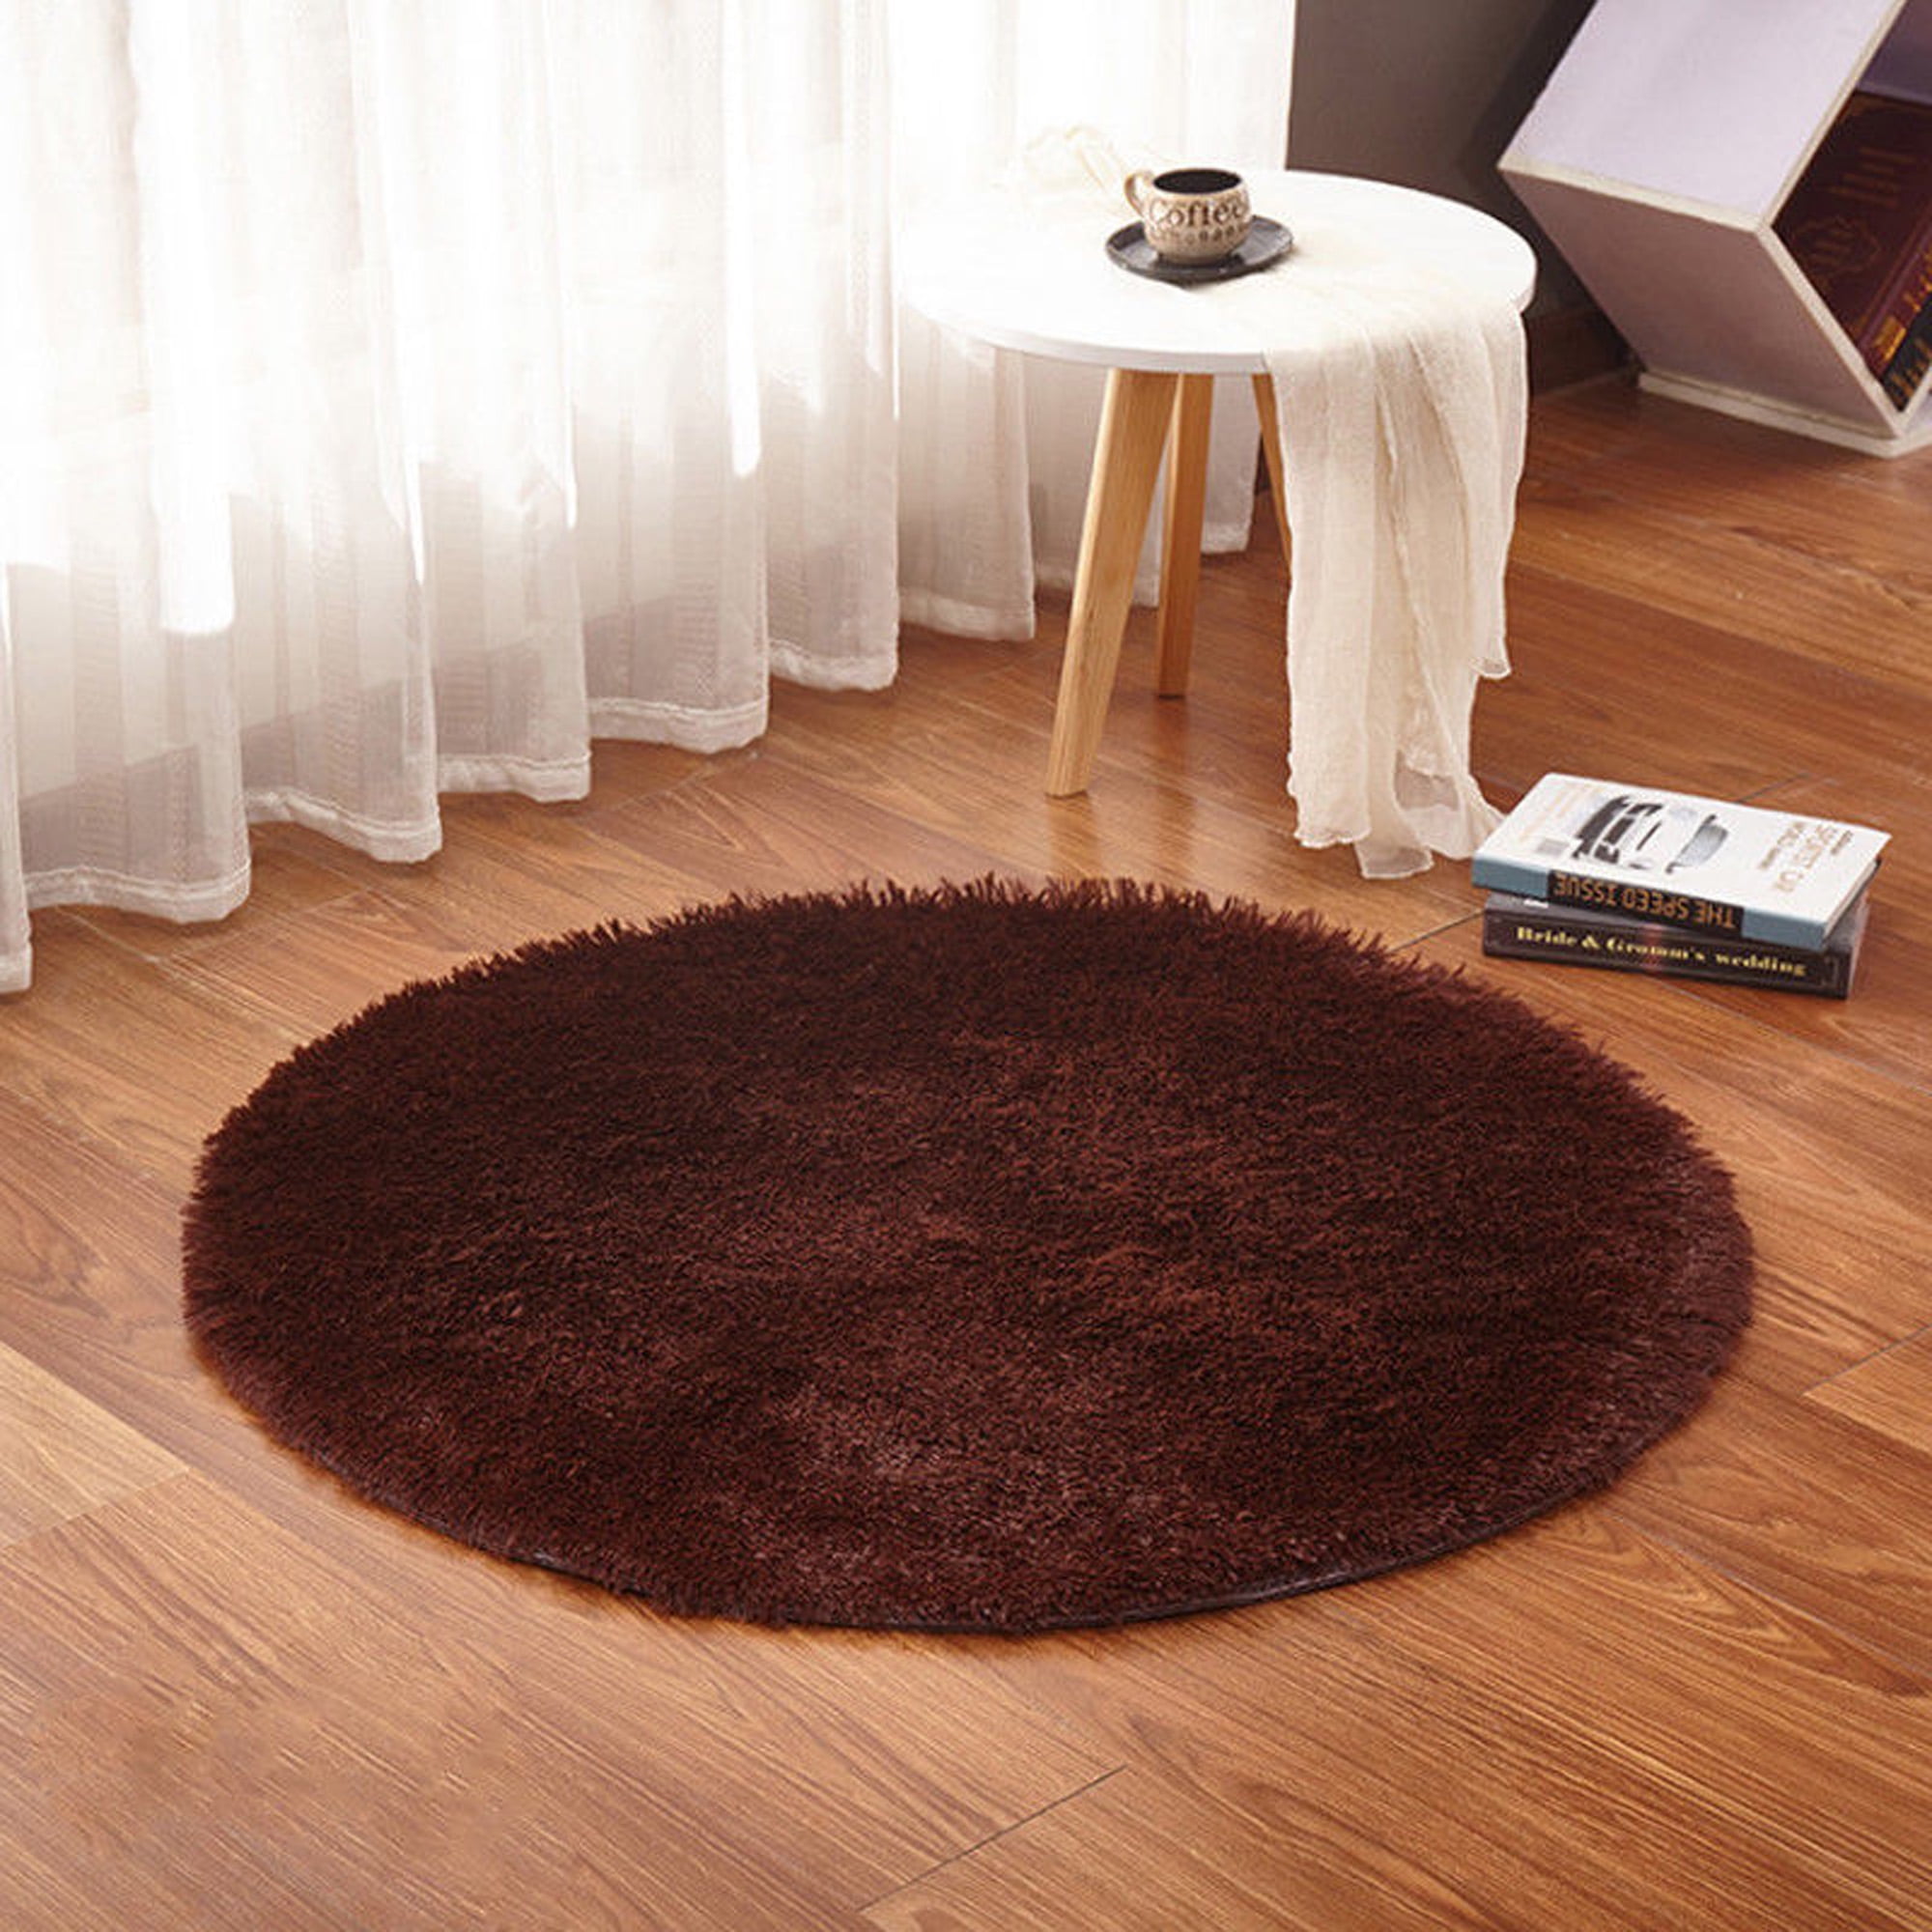 Details about  / 40cm Family Food Chair Cushion Door Mat Wrap Blanket Non Slip Bedroom Carpet Mat